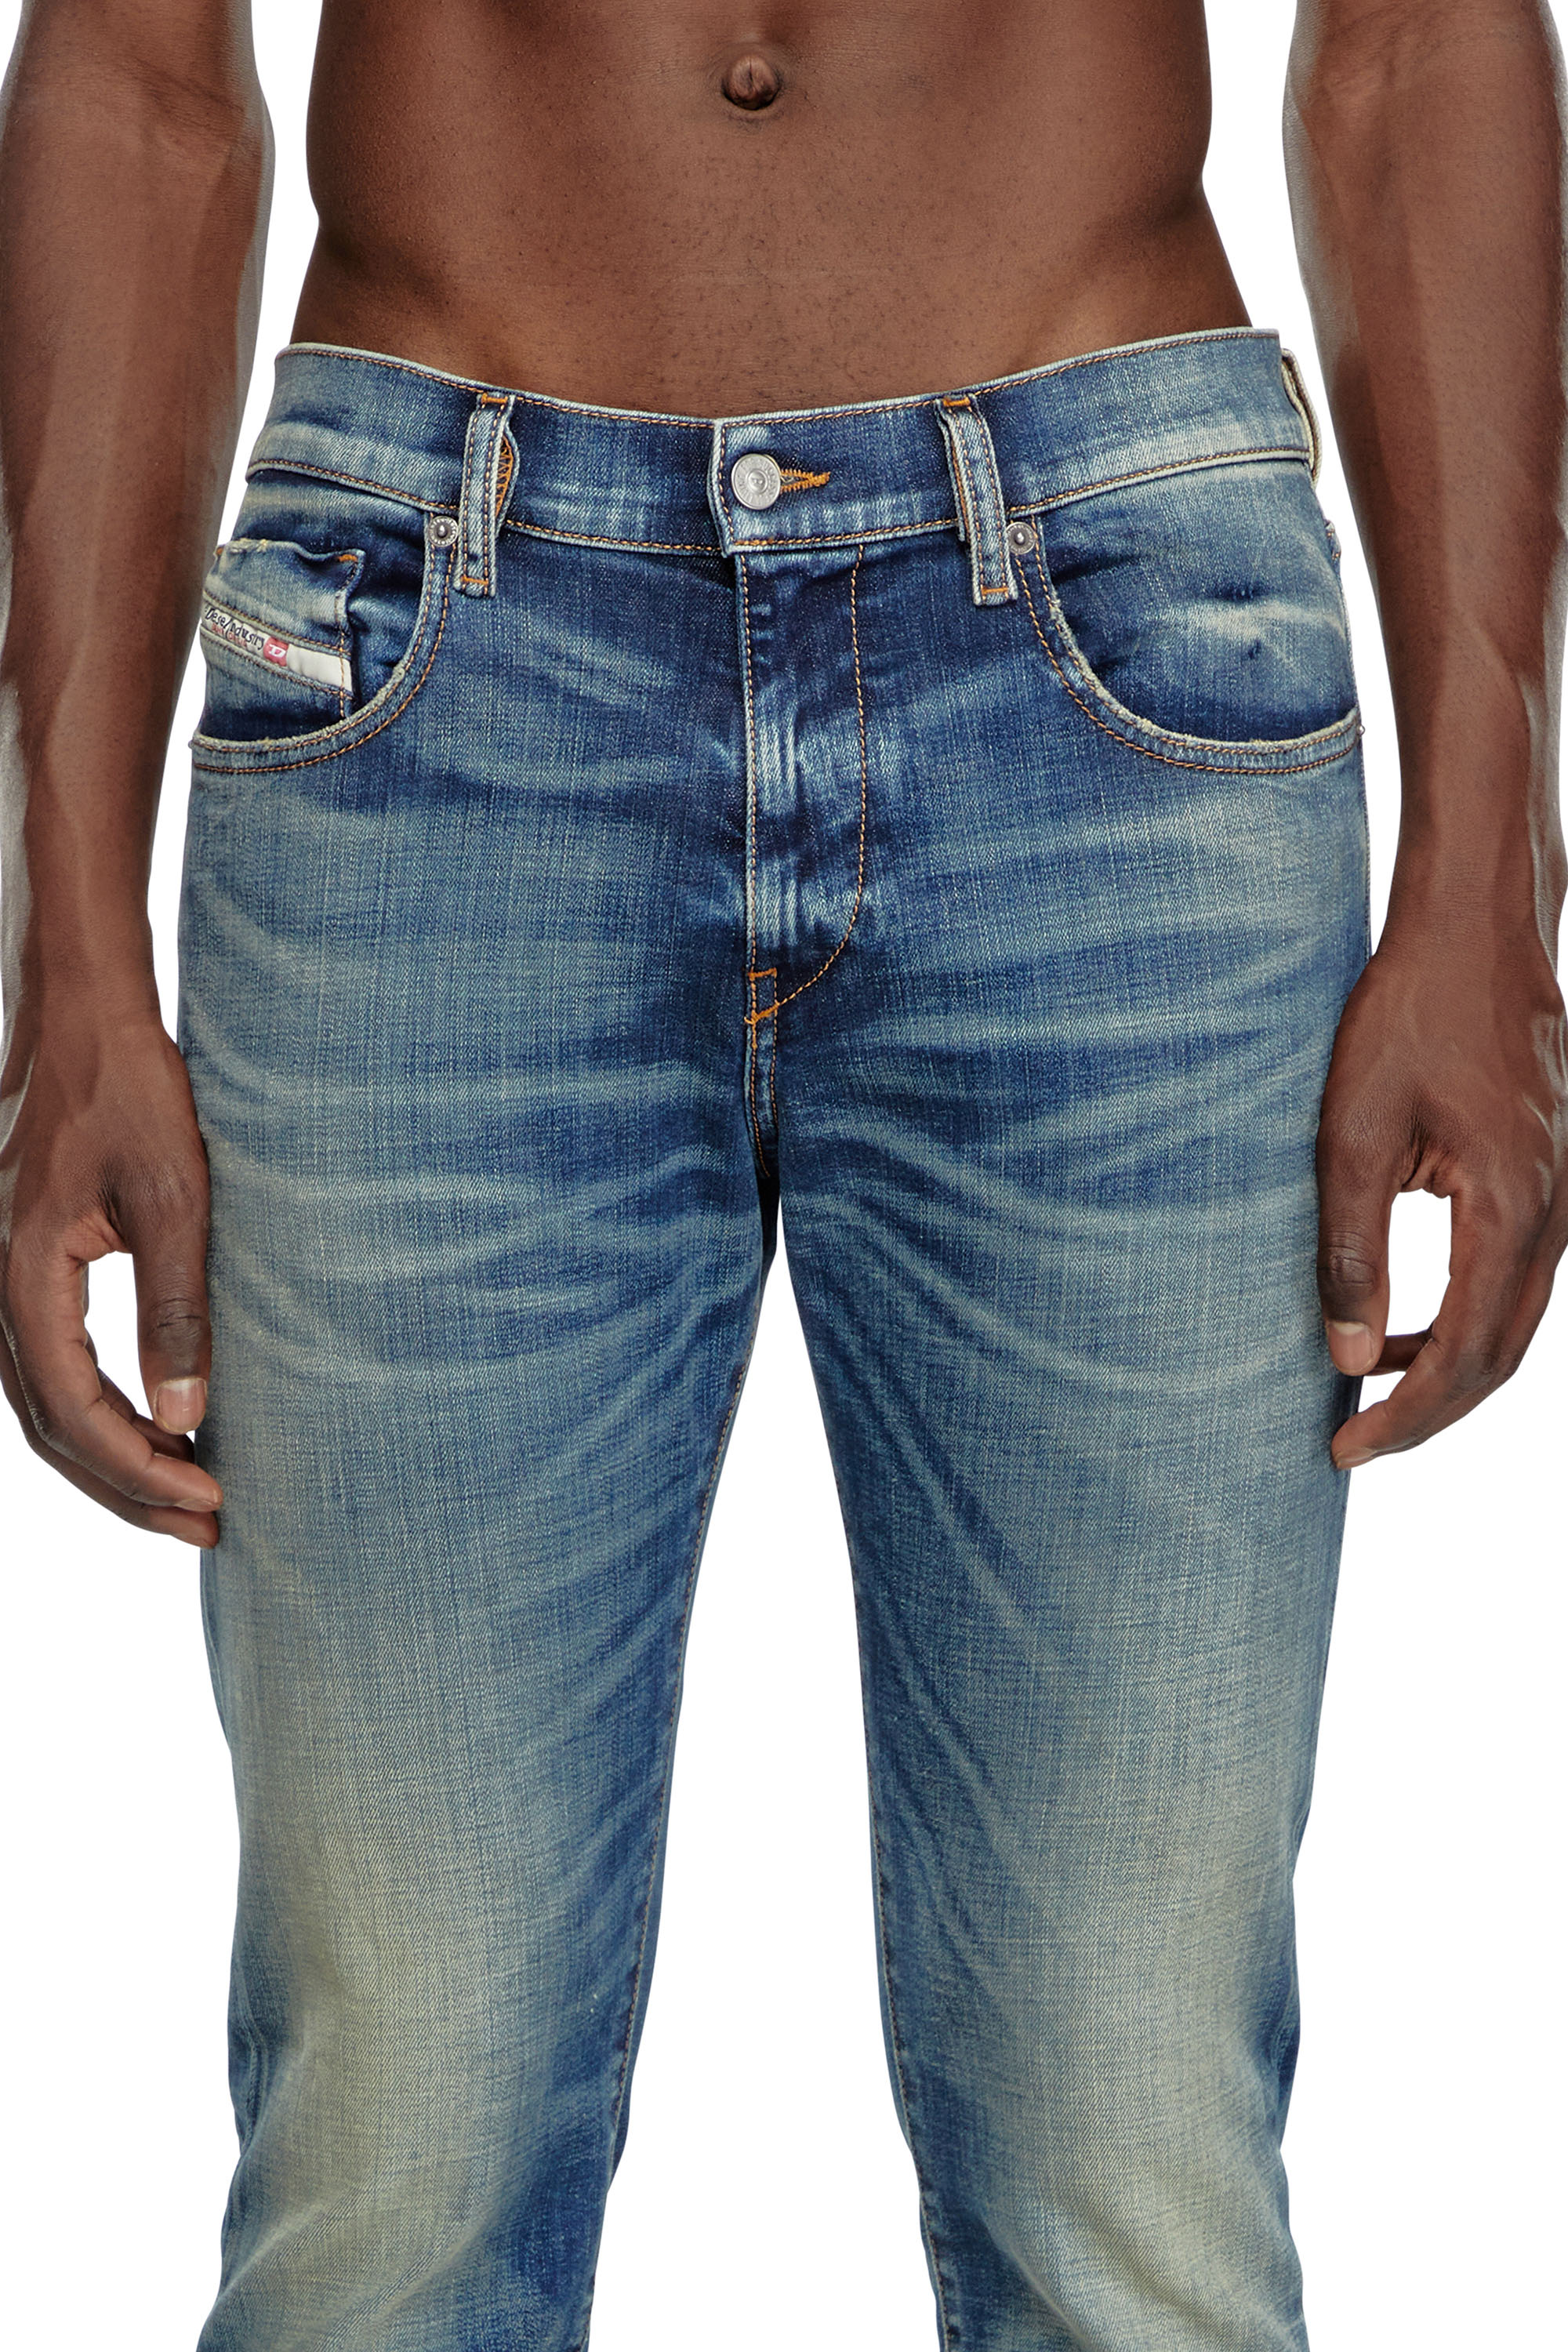 Diesel - Slim Jeans 2019 D-Strukt 09J50, Hombre Slim Jeans - 2019 D-Strukt in Azul marino - Image 5